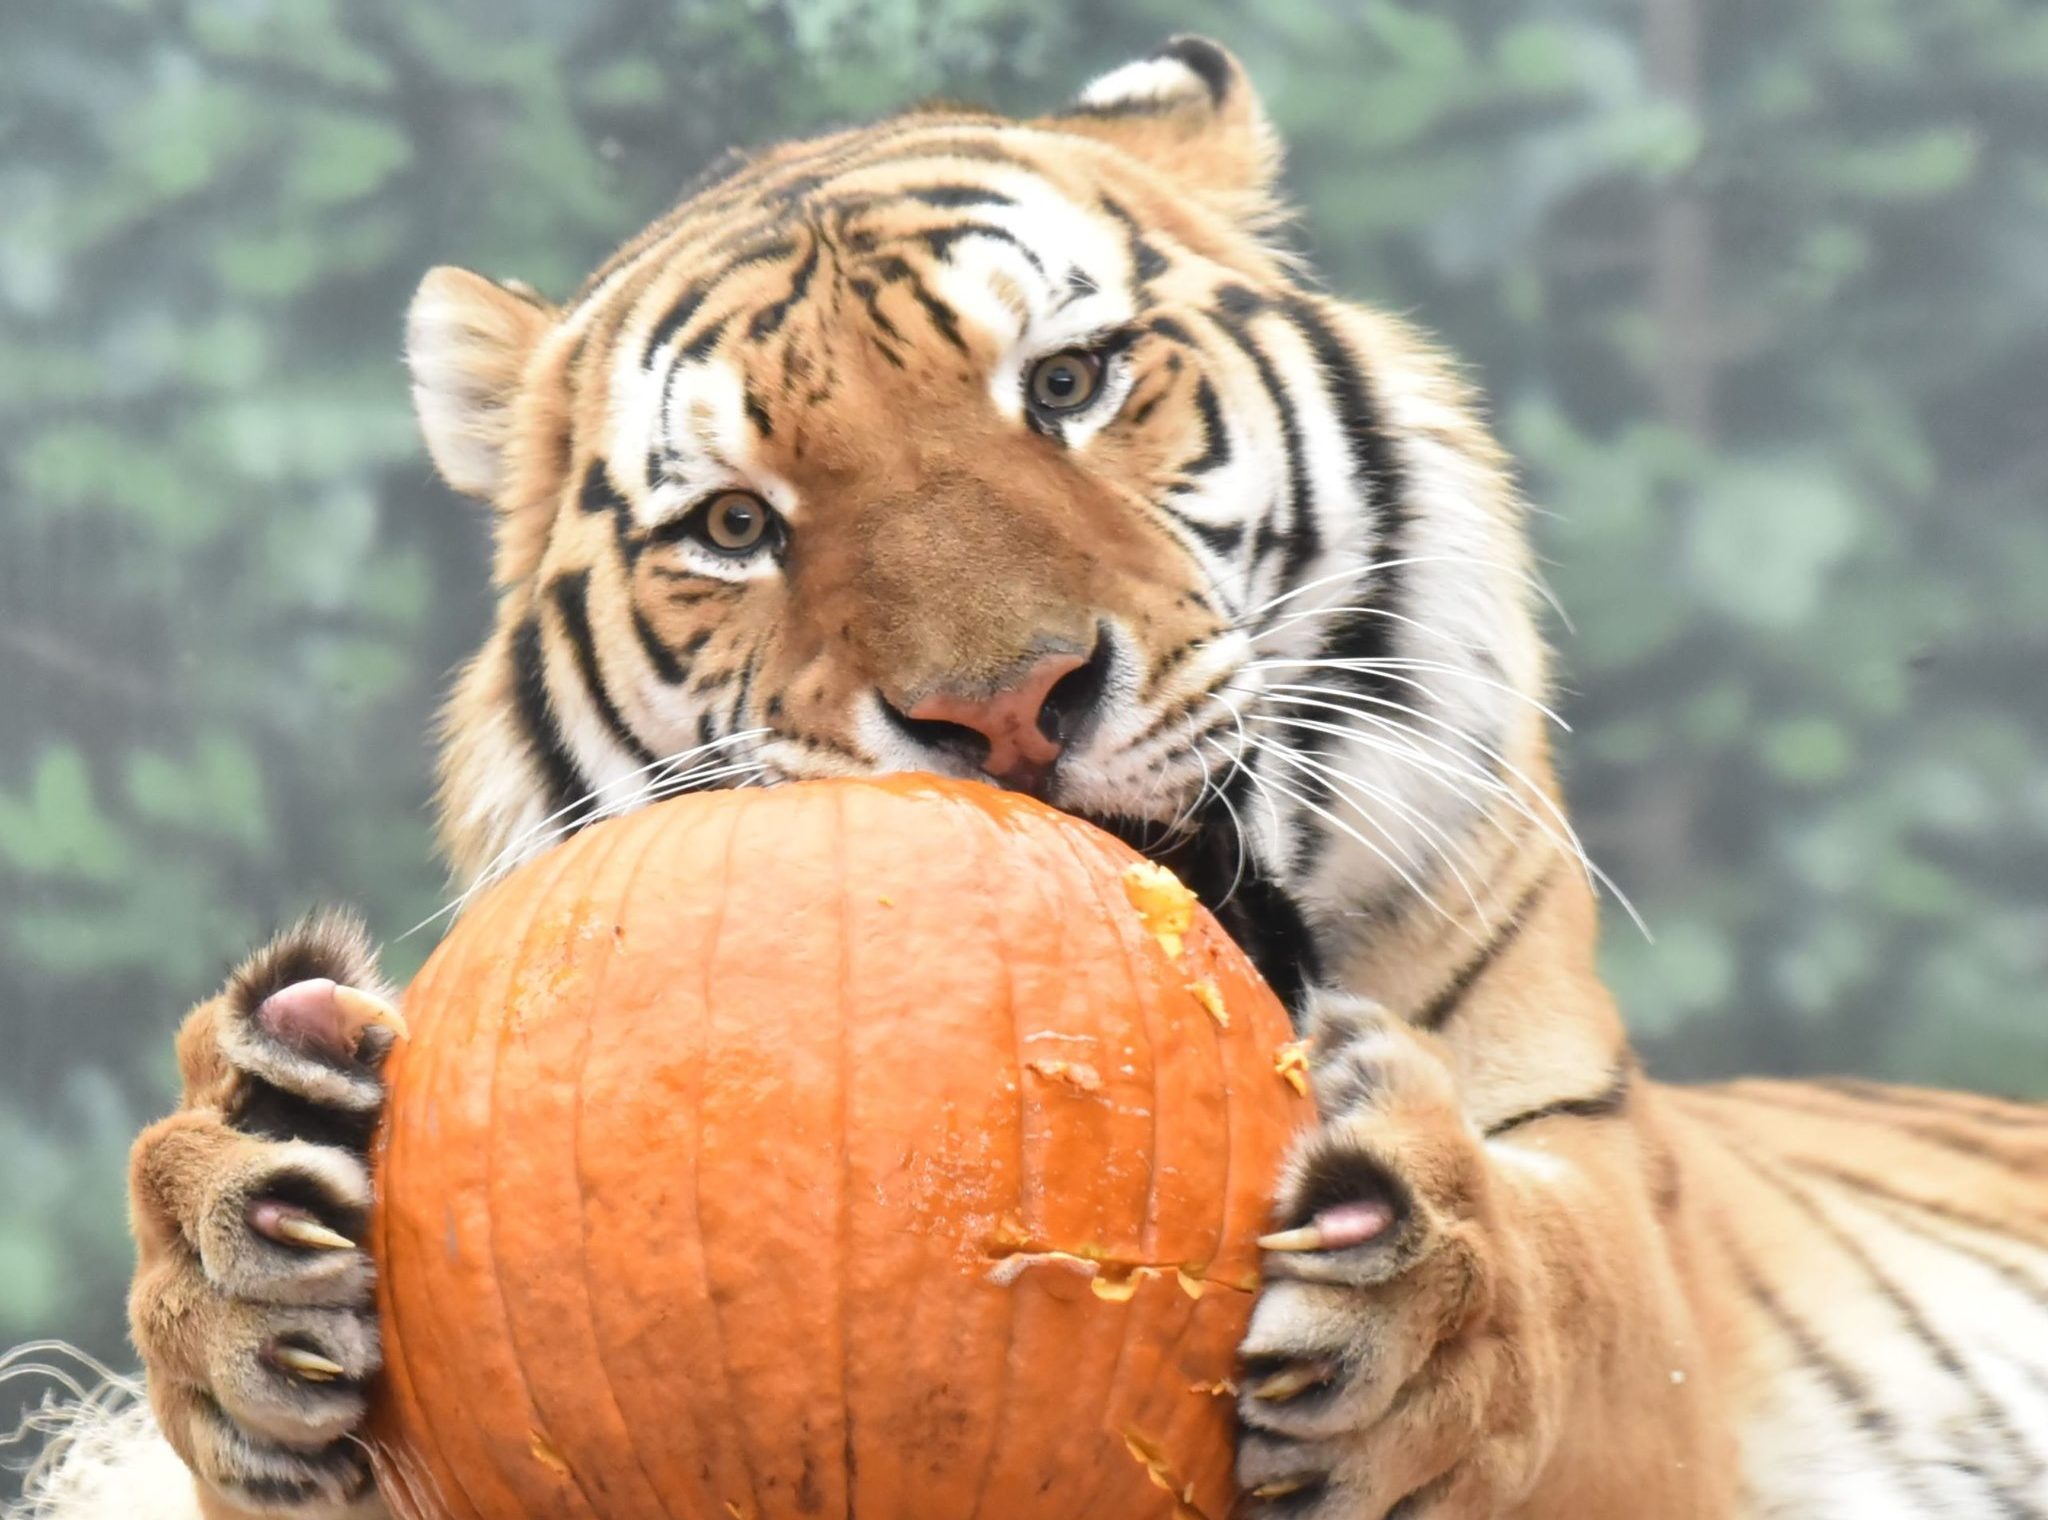 tiger eating pumpkin